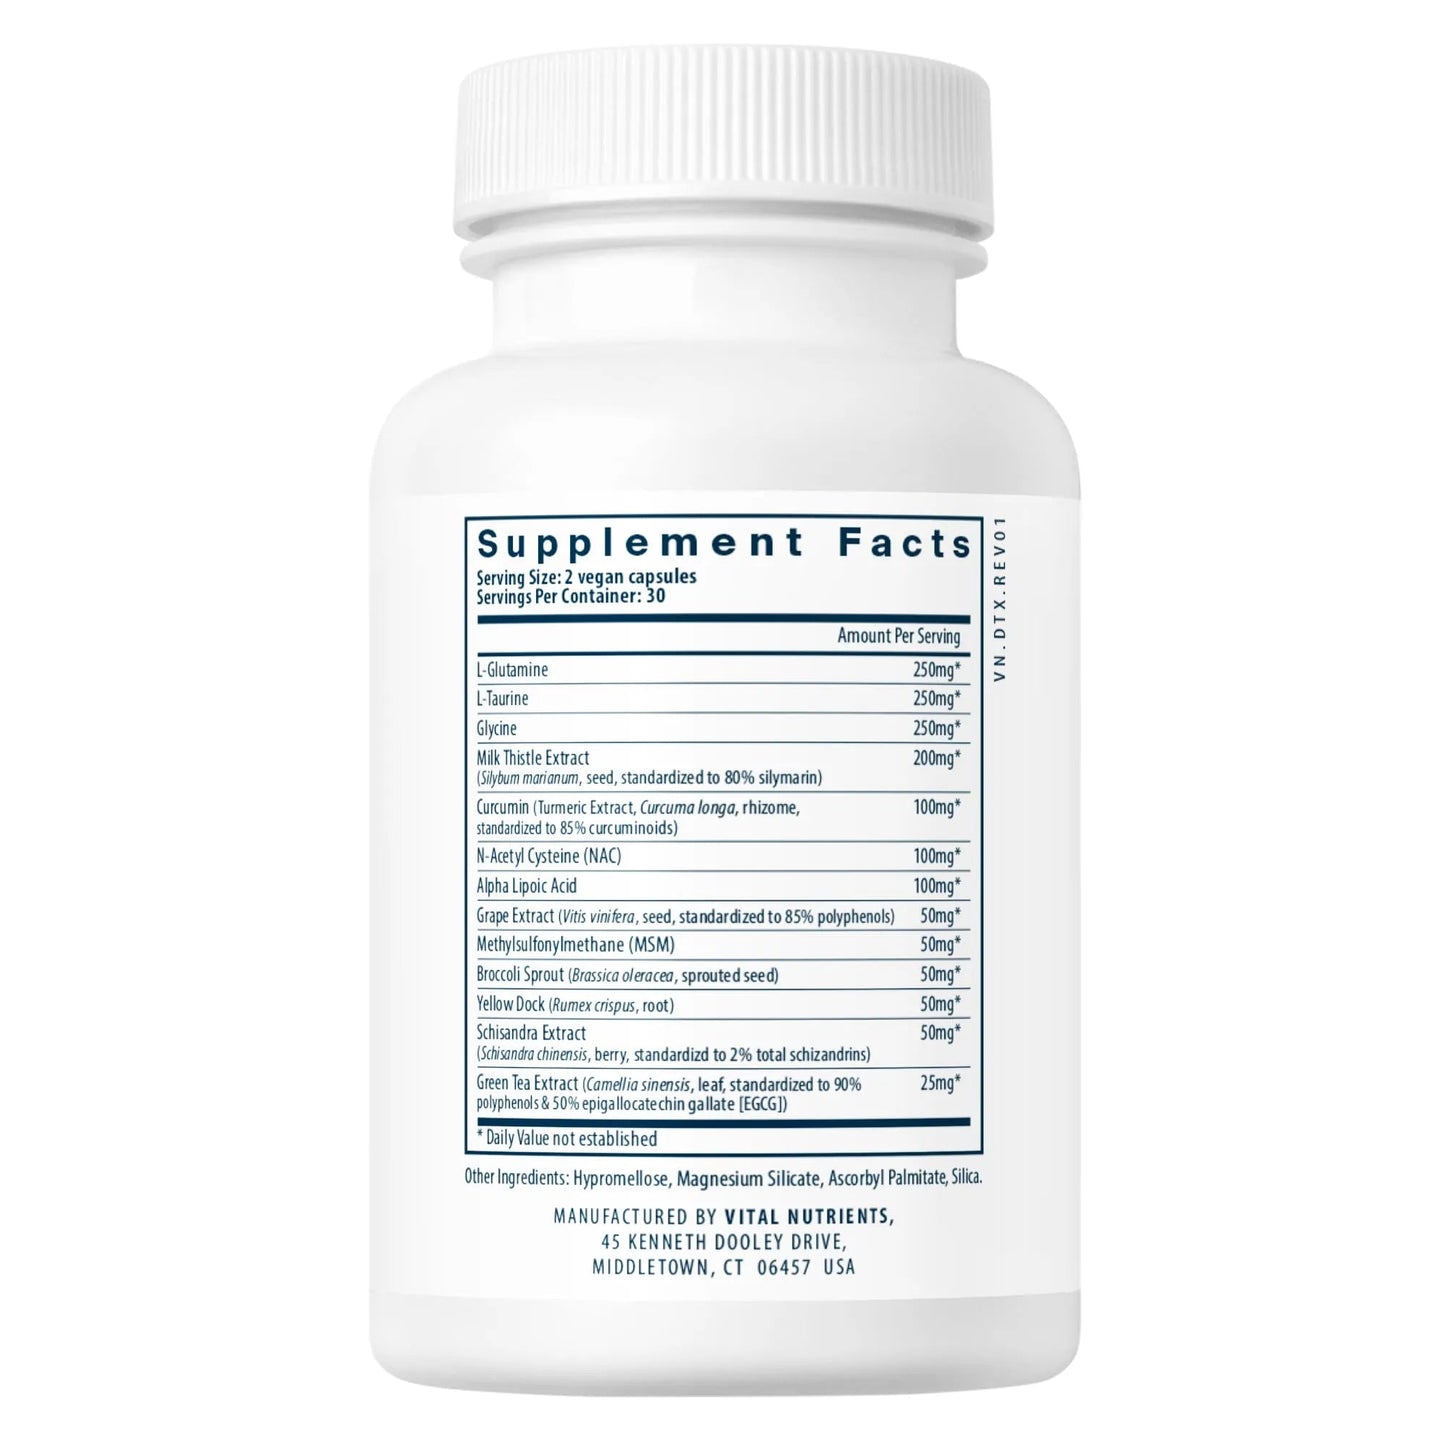 Detox Formula(Vital Nutrition) - HAPIVERI